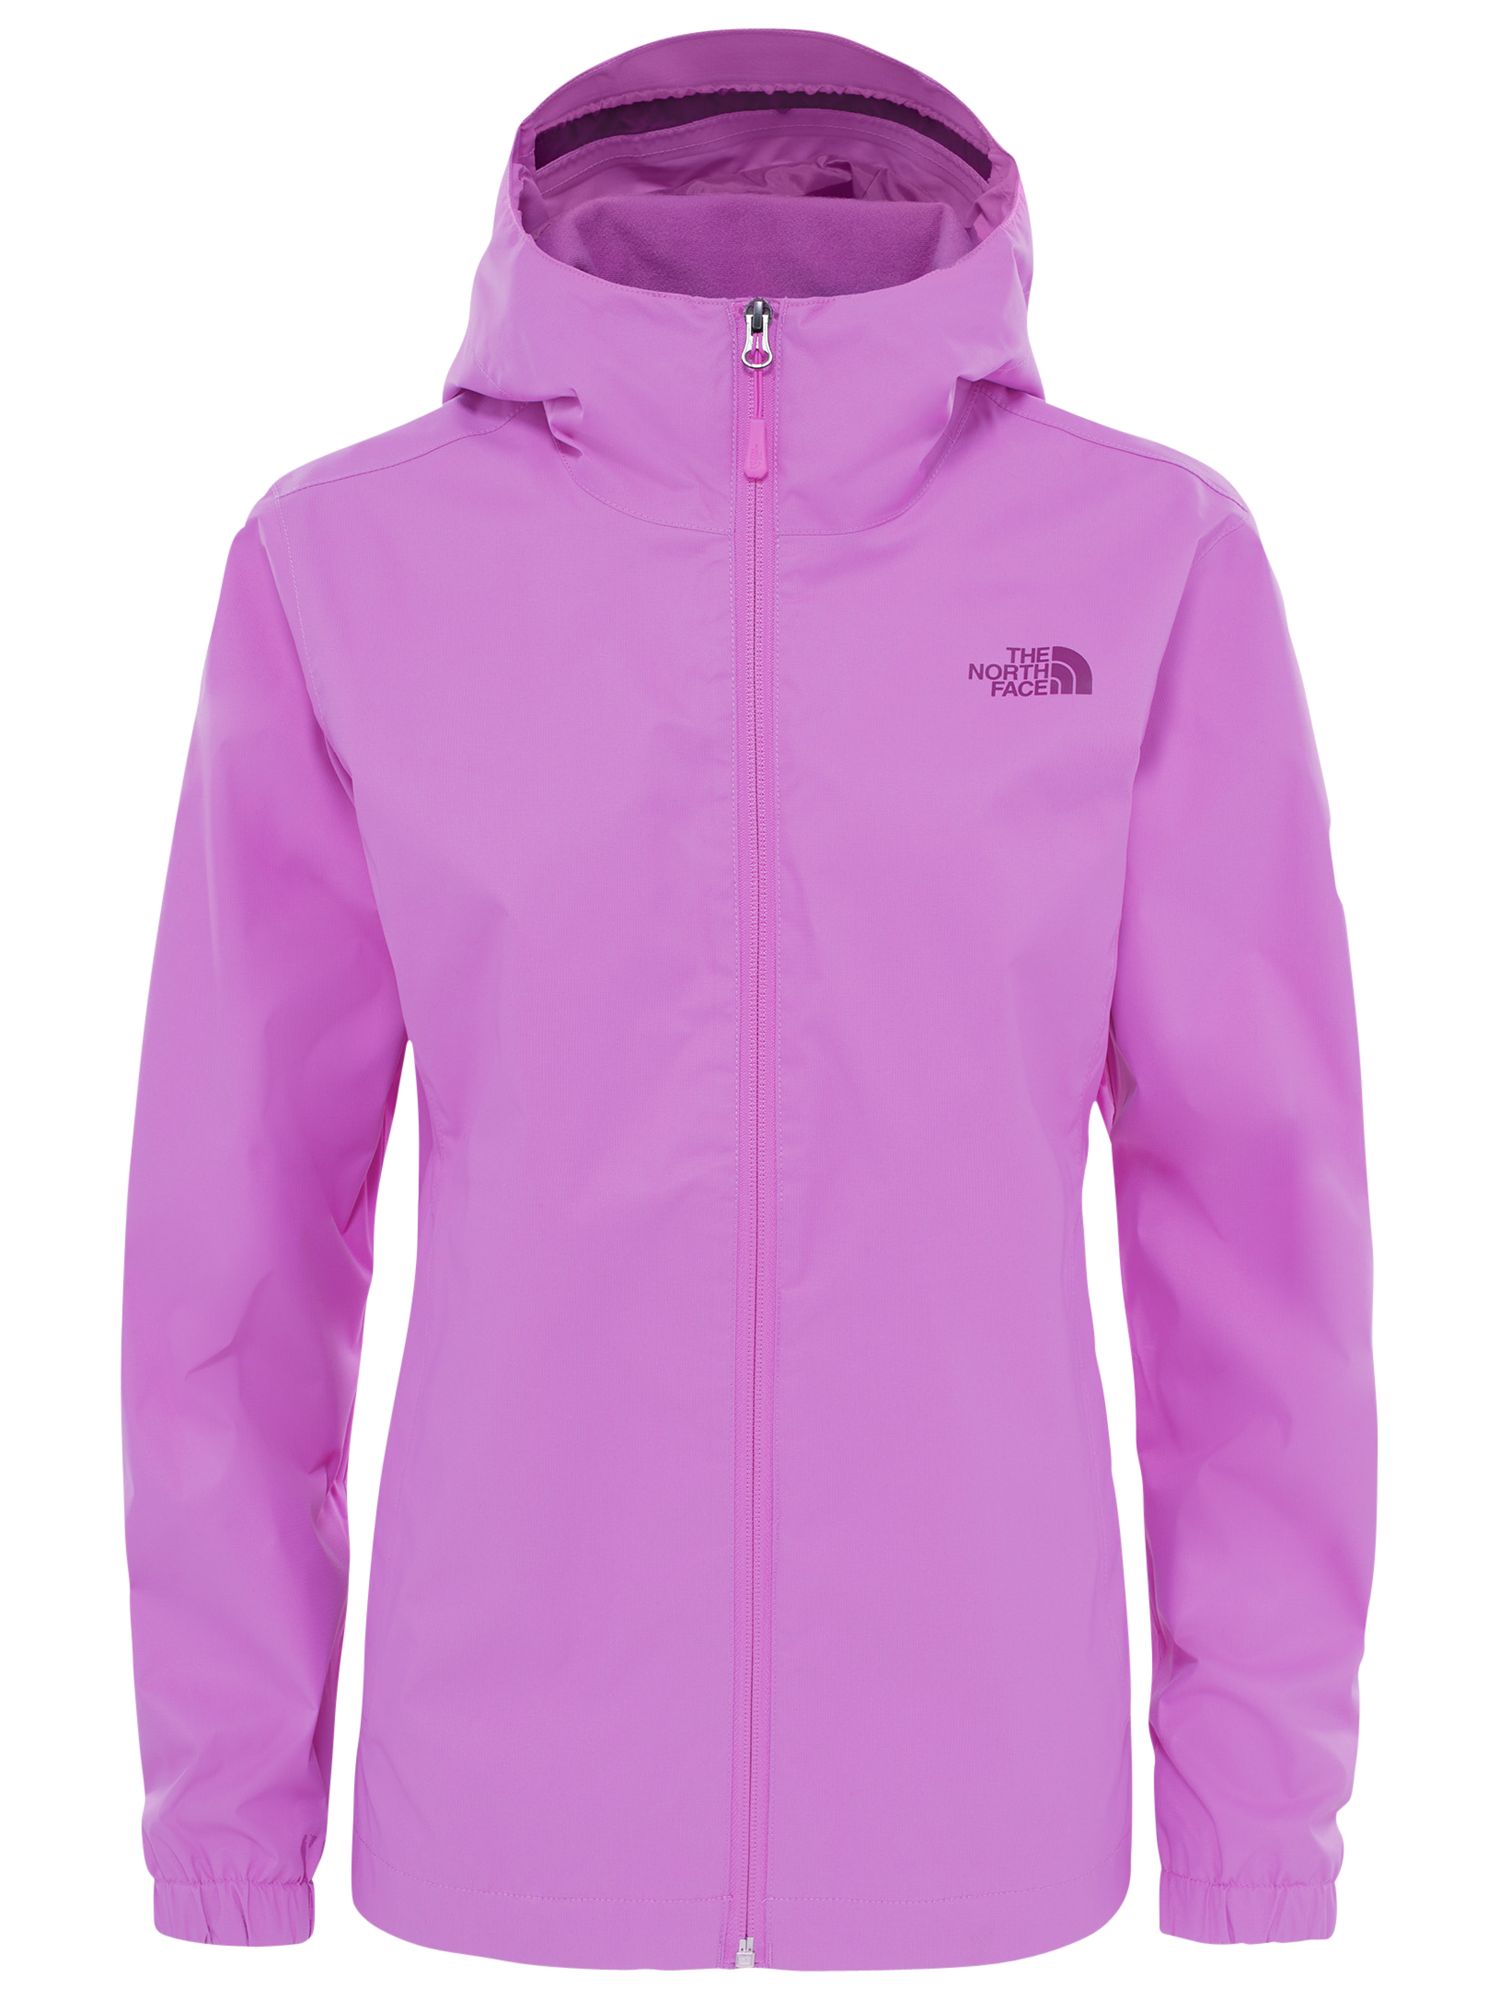 The North Face Quest Waterproof Women's Jacket, Purple, M